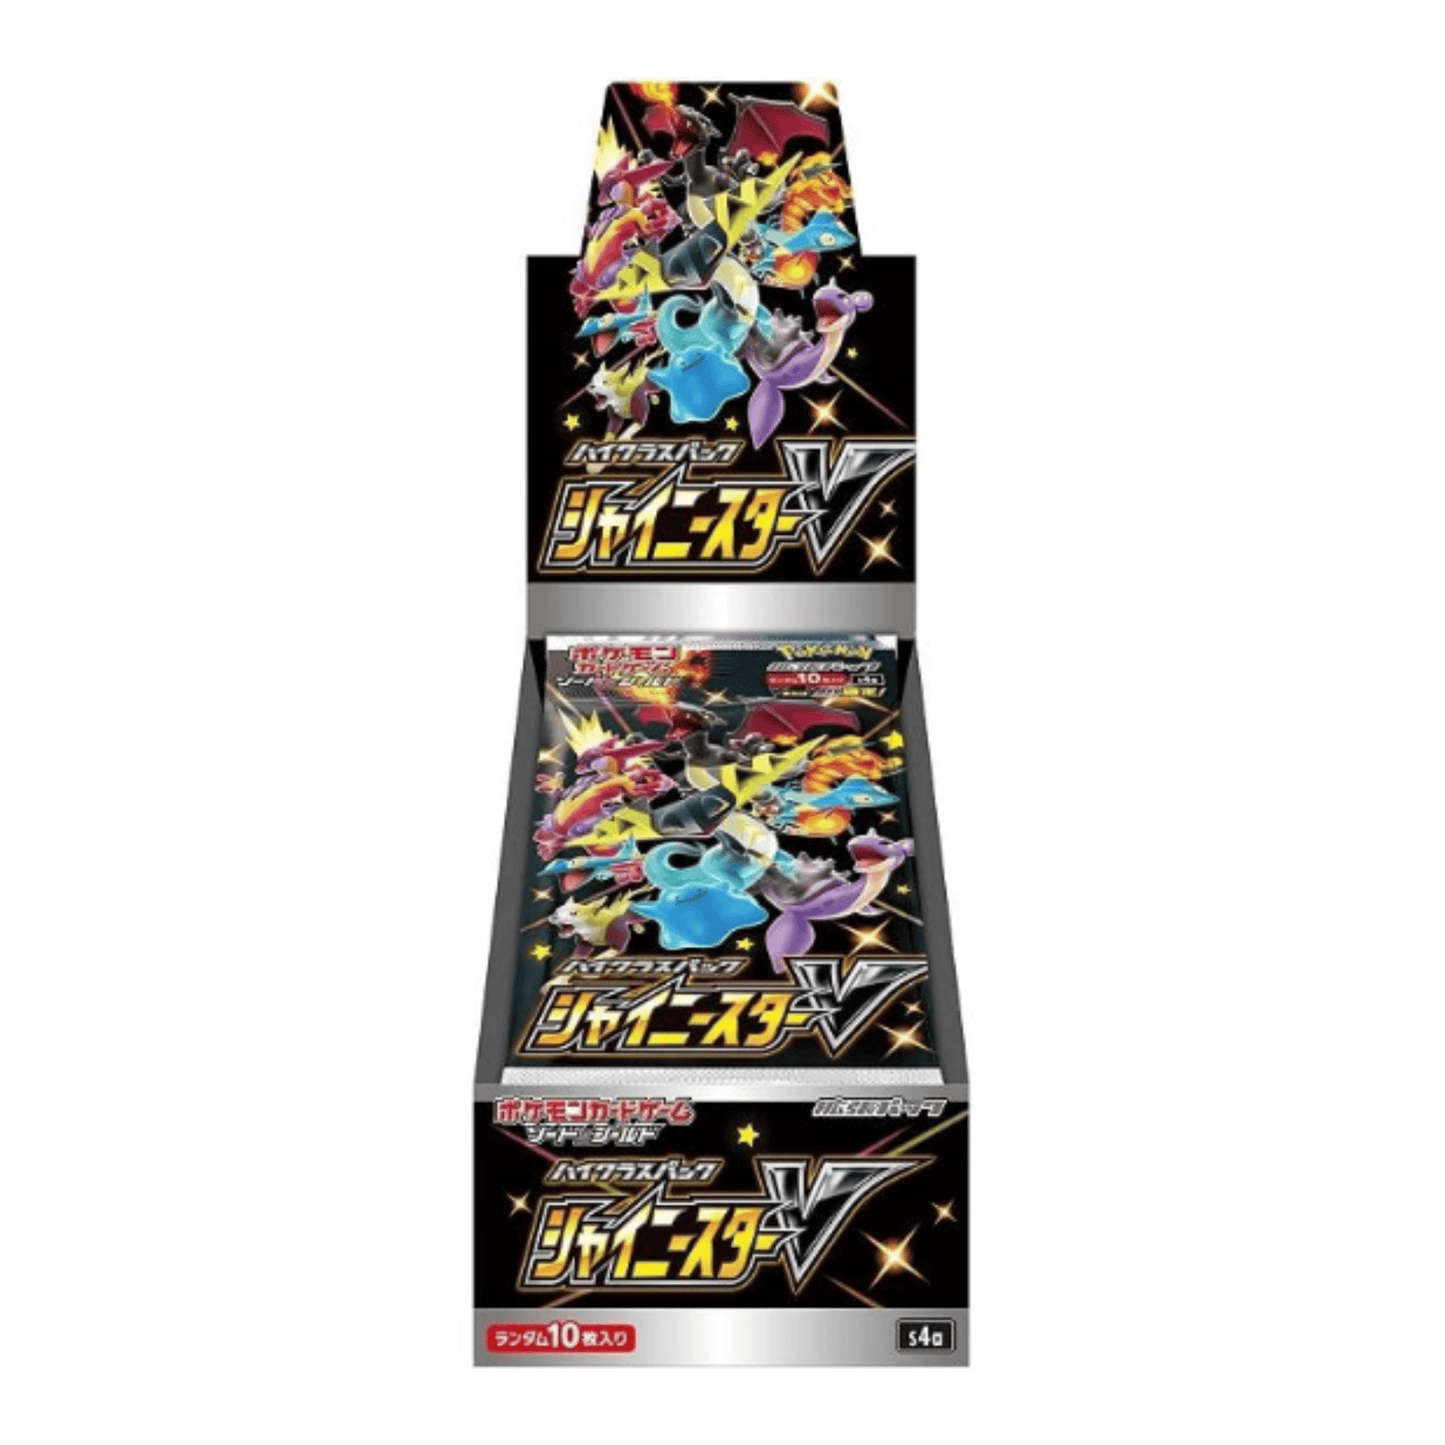 Pokémon Shiny star V S4a | Display / Booster Box ChitoroShop